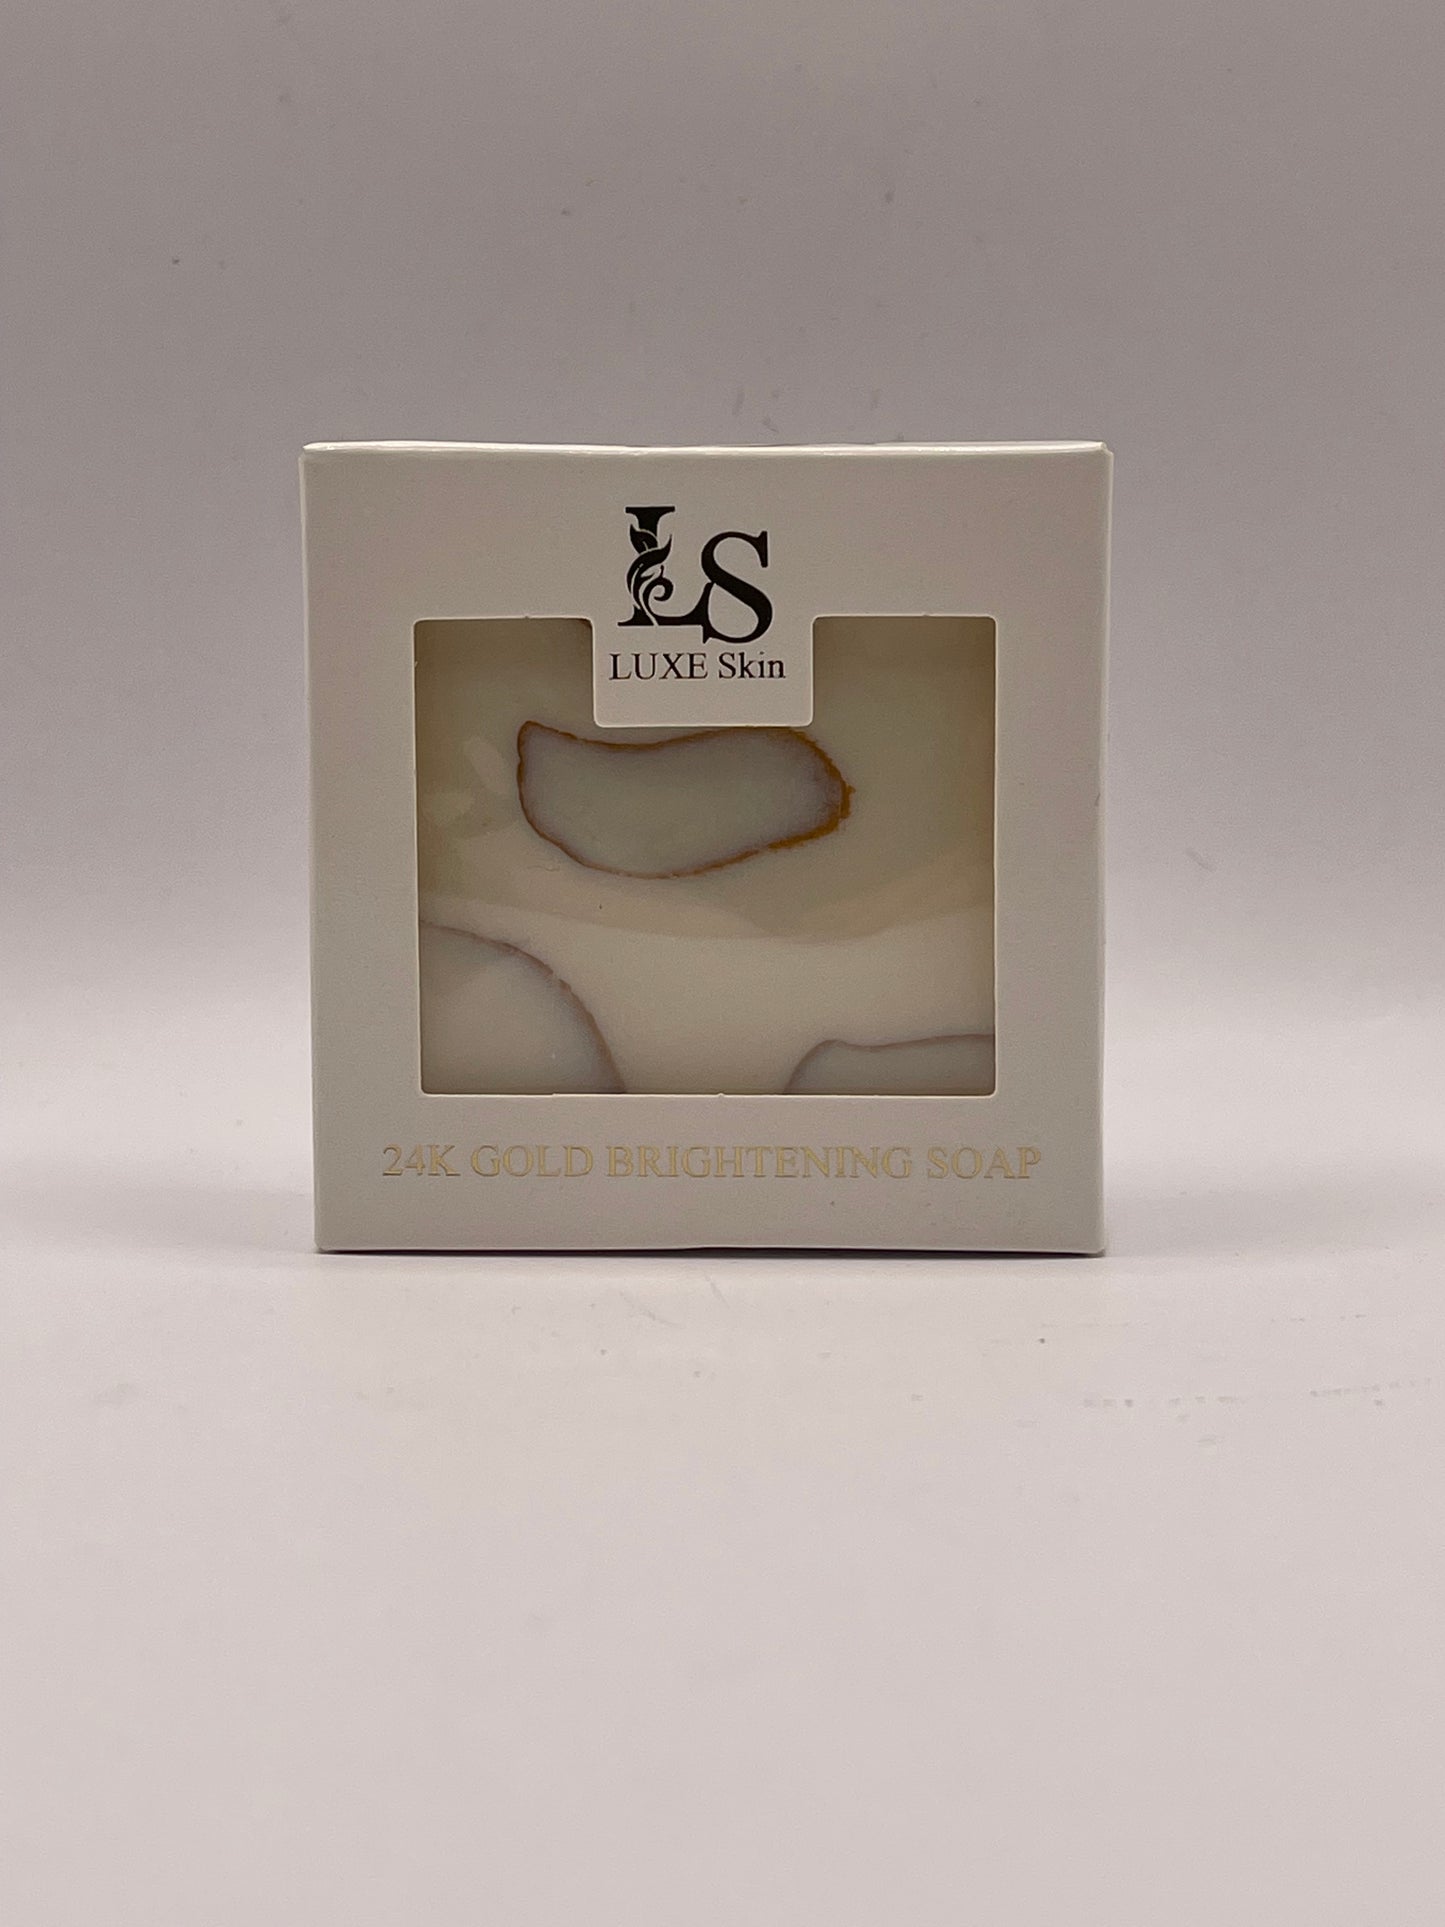 Luxe Skin 24K Gold Brightening Soap